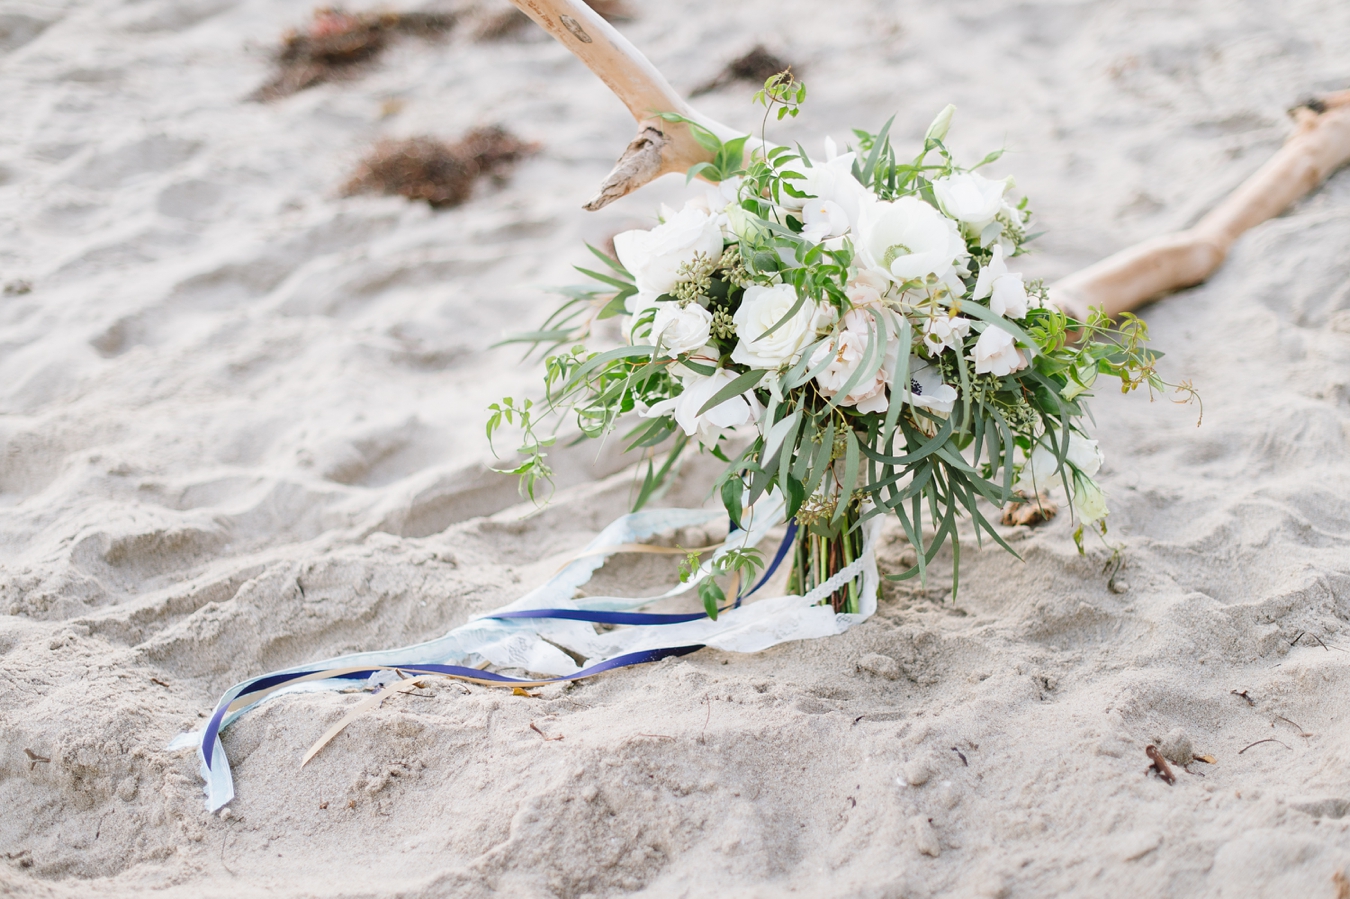 Coastal Wedding Inspiration | Santa Barbara California & Destination Wedding Photographer: Natalie Franke Photography